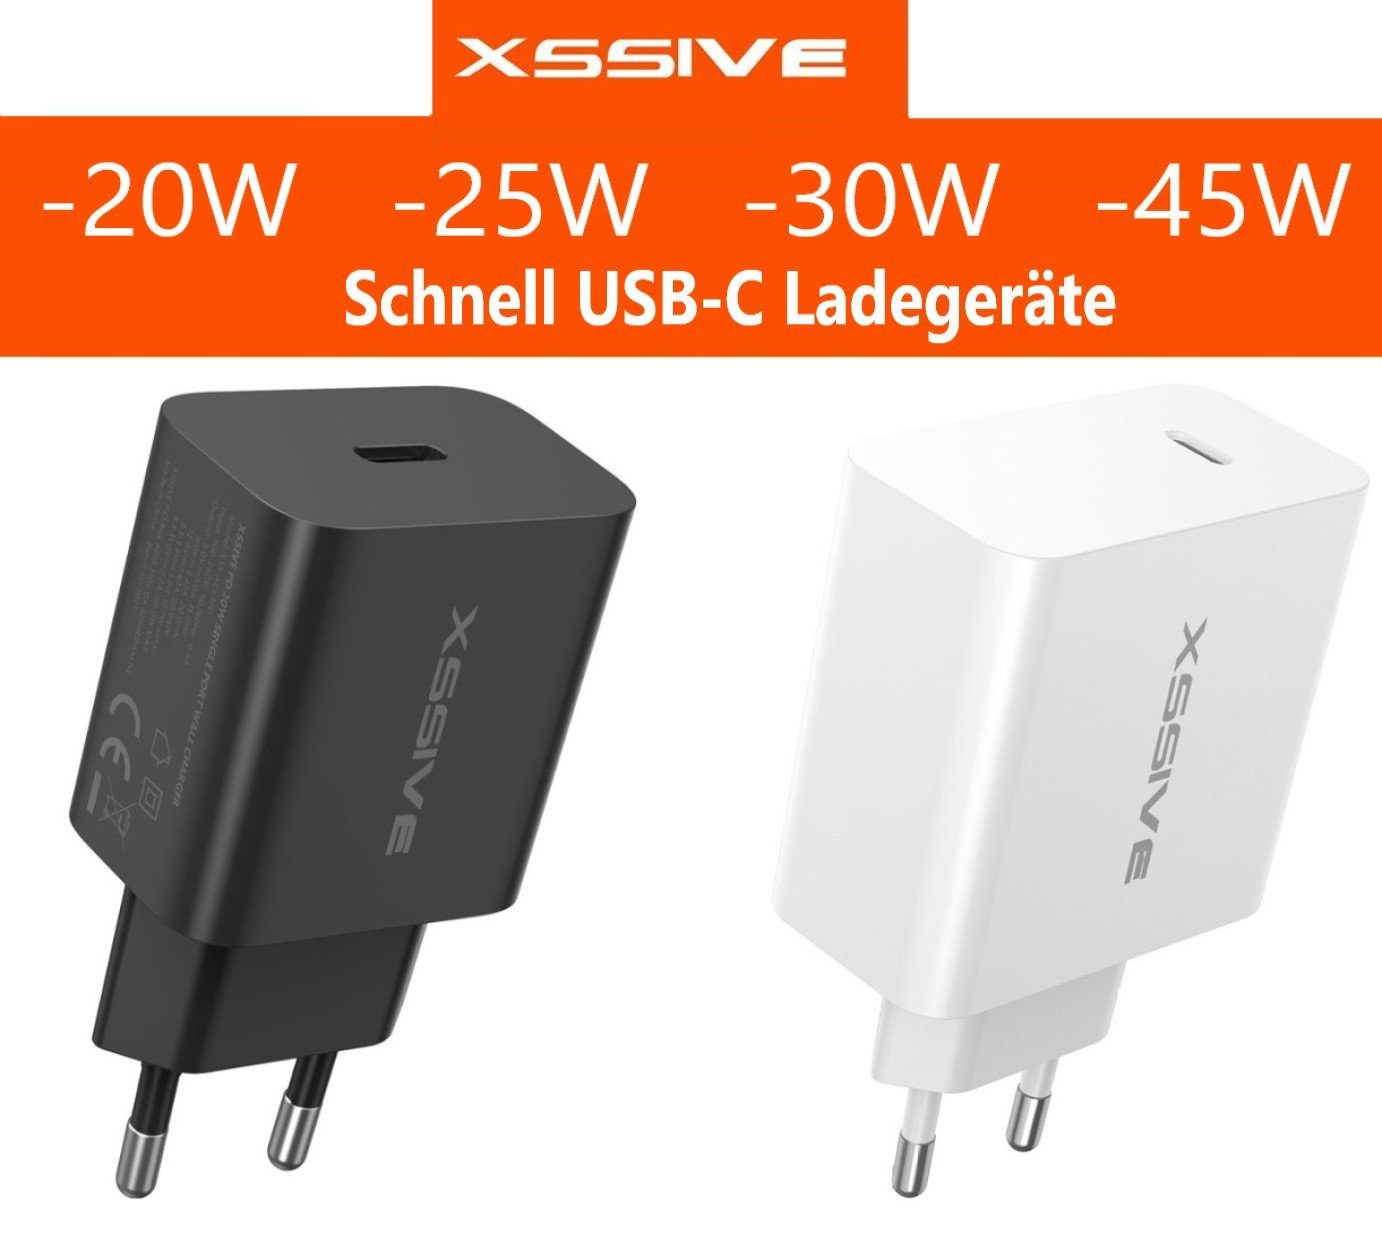 Xssive Universal Schnell UBC-C Ladegeräte 20W-25W-30W-45W für